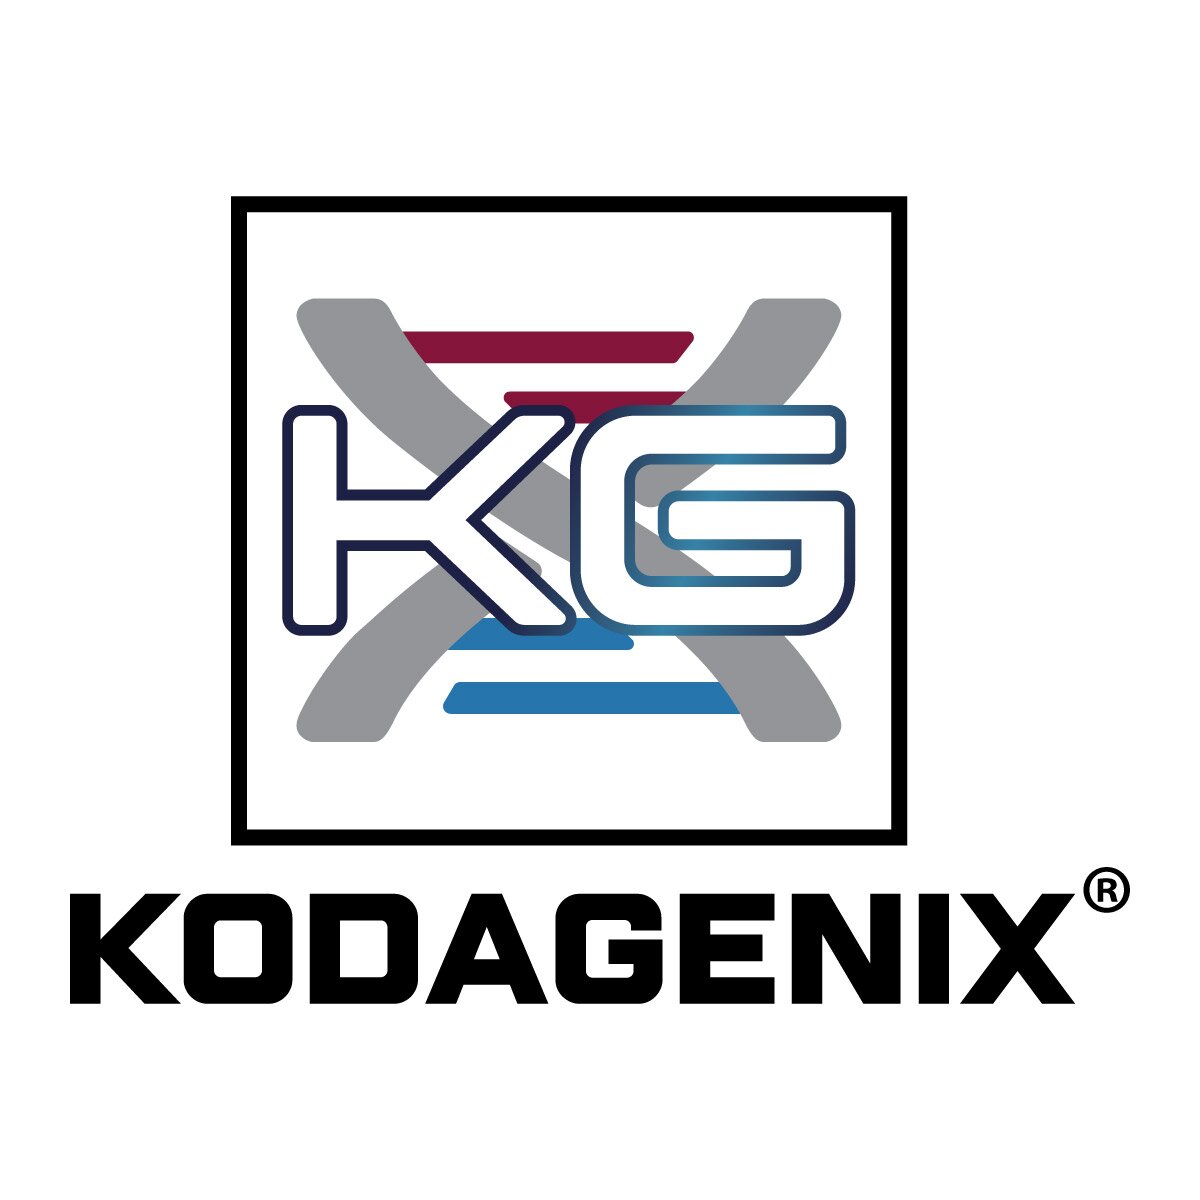 Kodagenix®